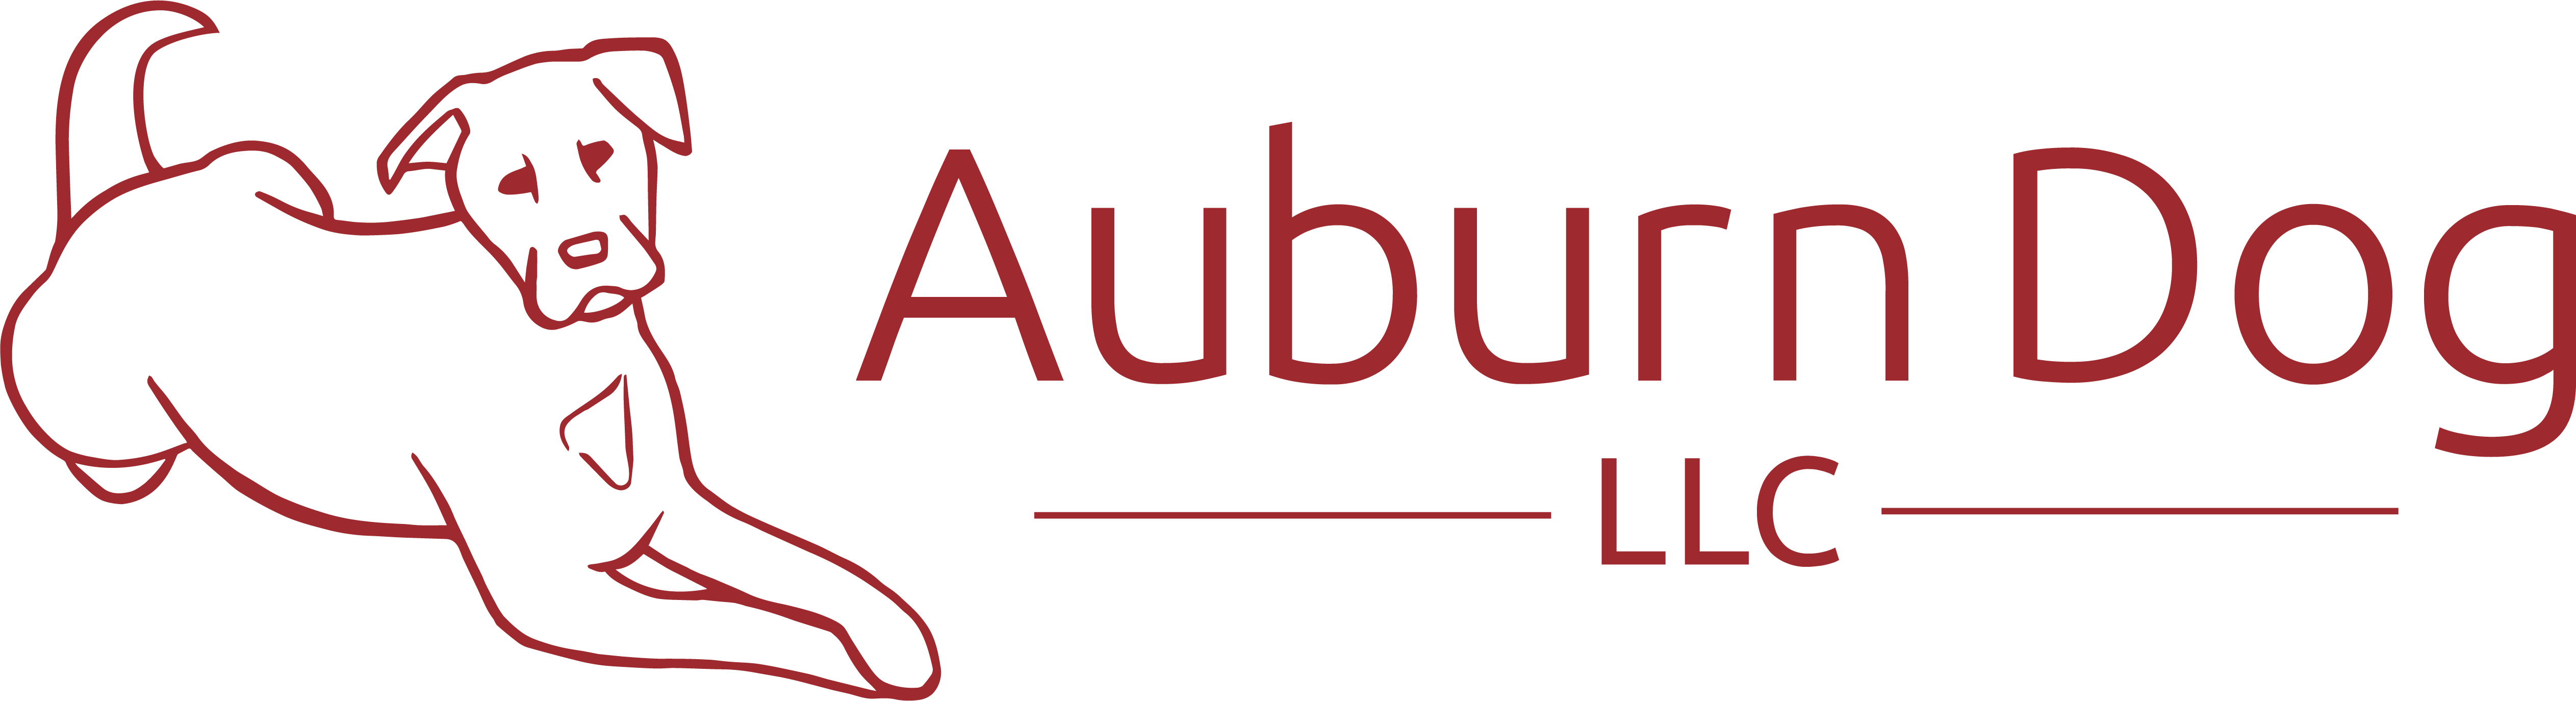 Auburn Dog LLC logo